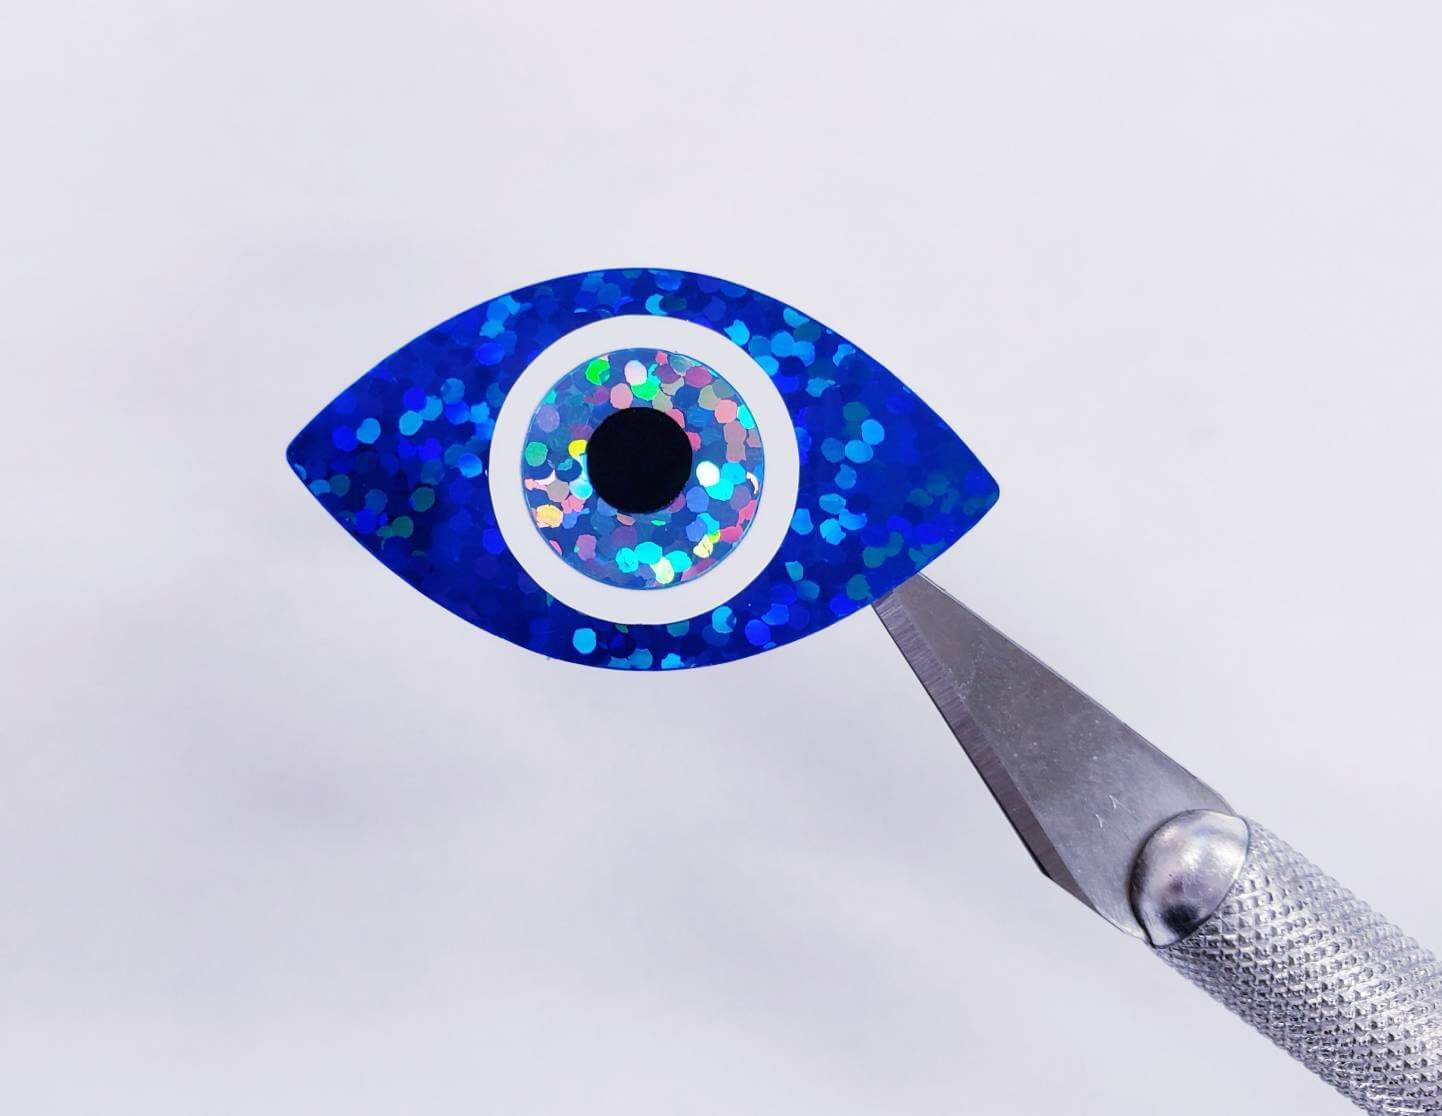 Evil Eye Stickers, set of blue eye glitter vinyl decals, good luck totem, Turkish Nazar spiritual protection symbol, karma charm, Mal de Ojo